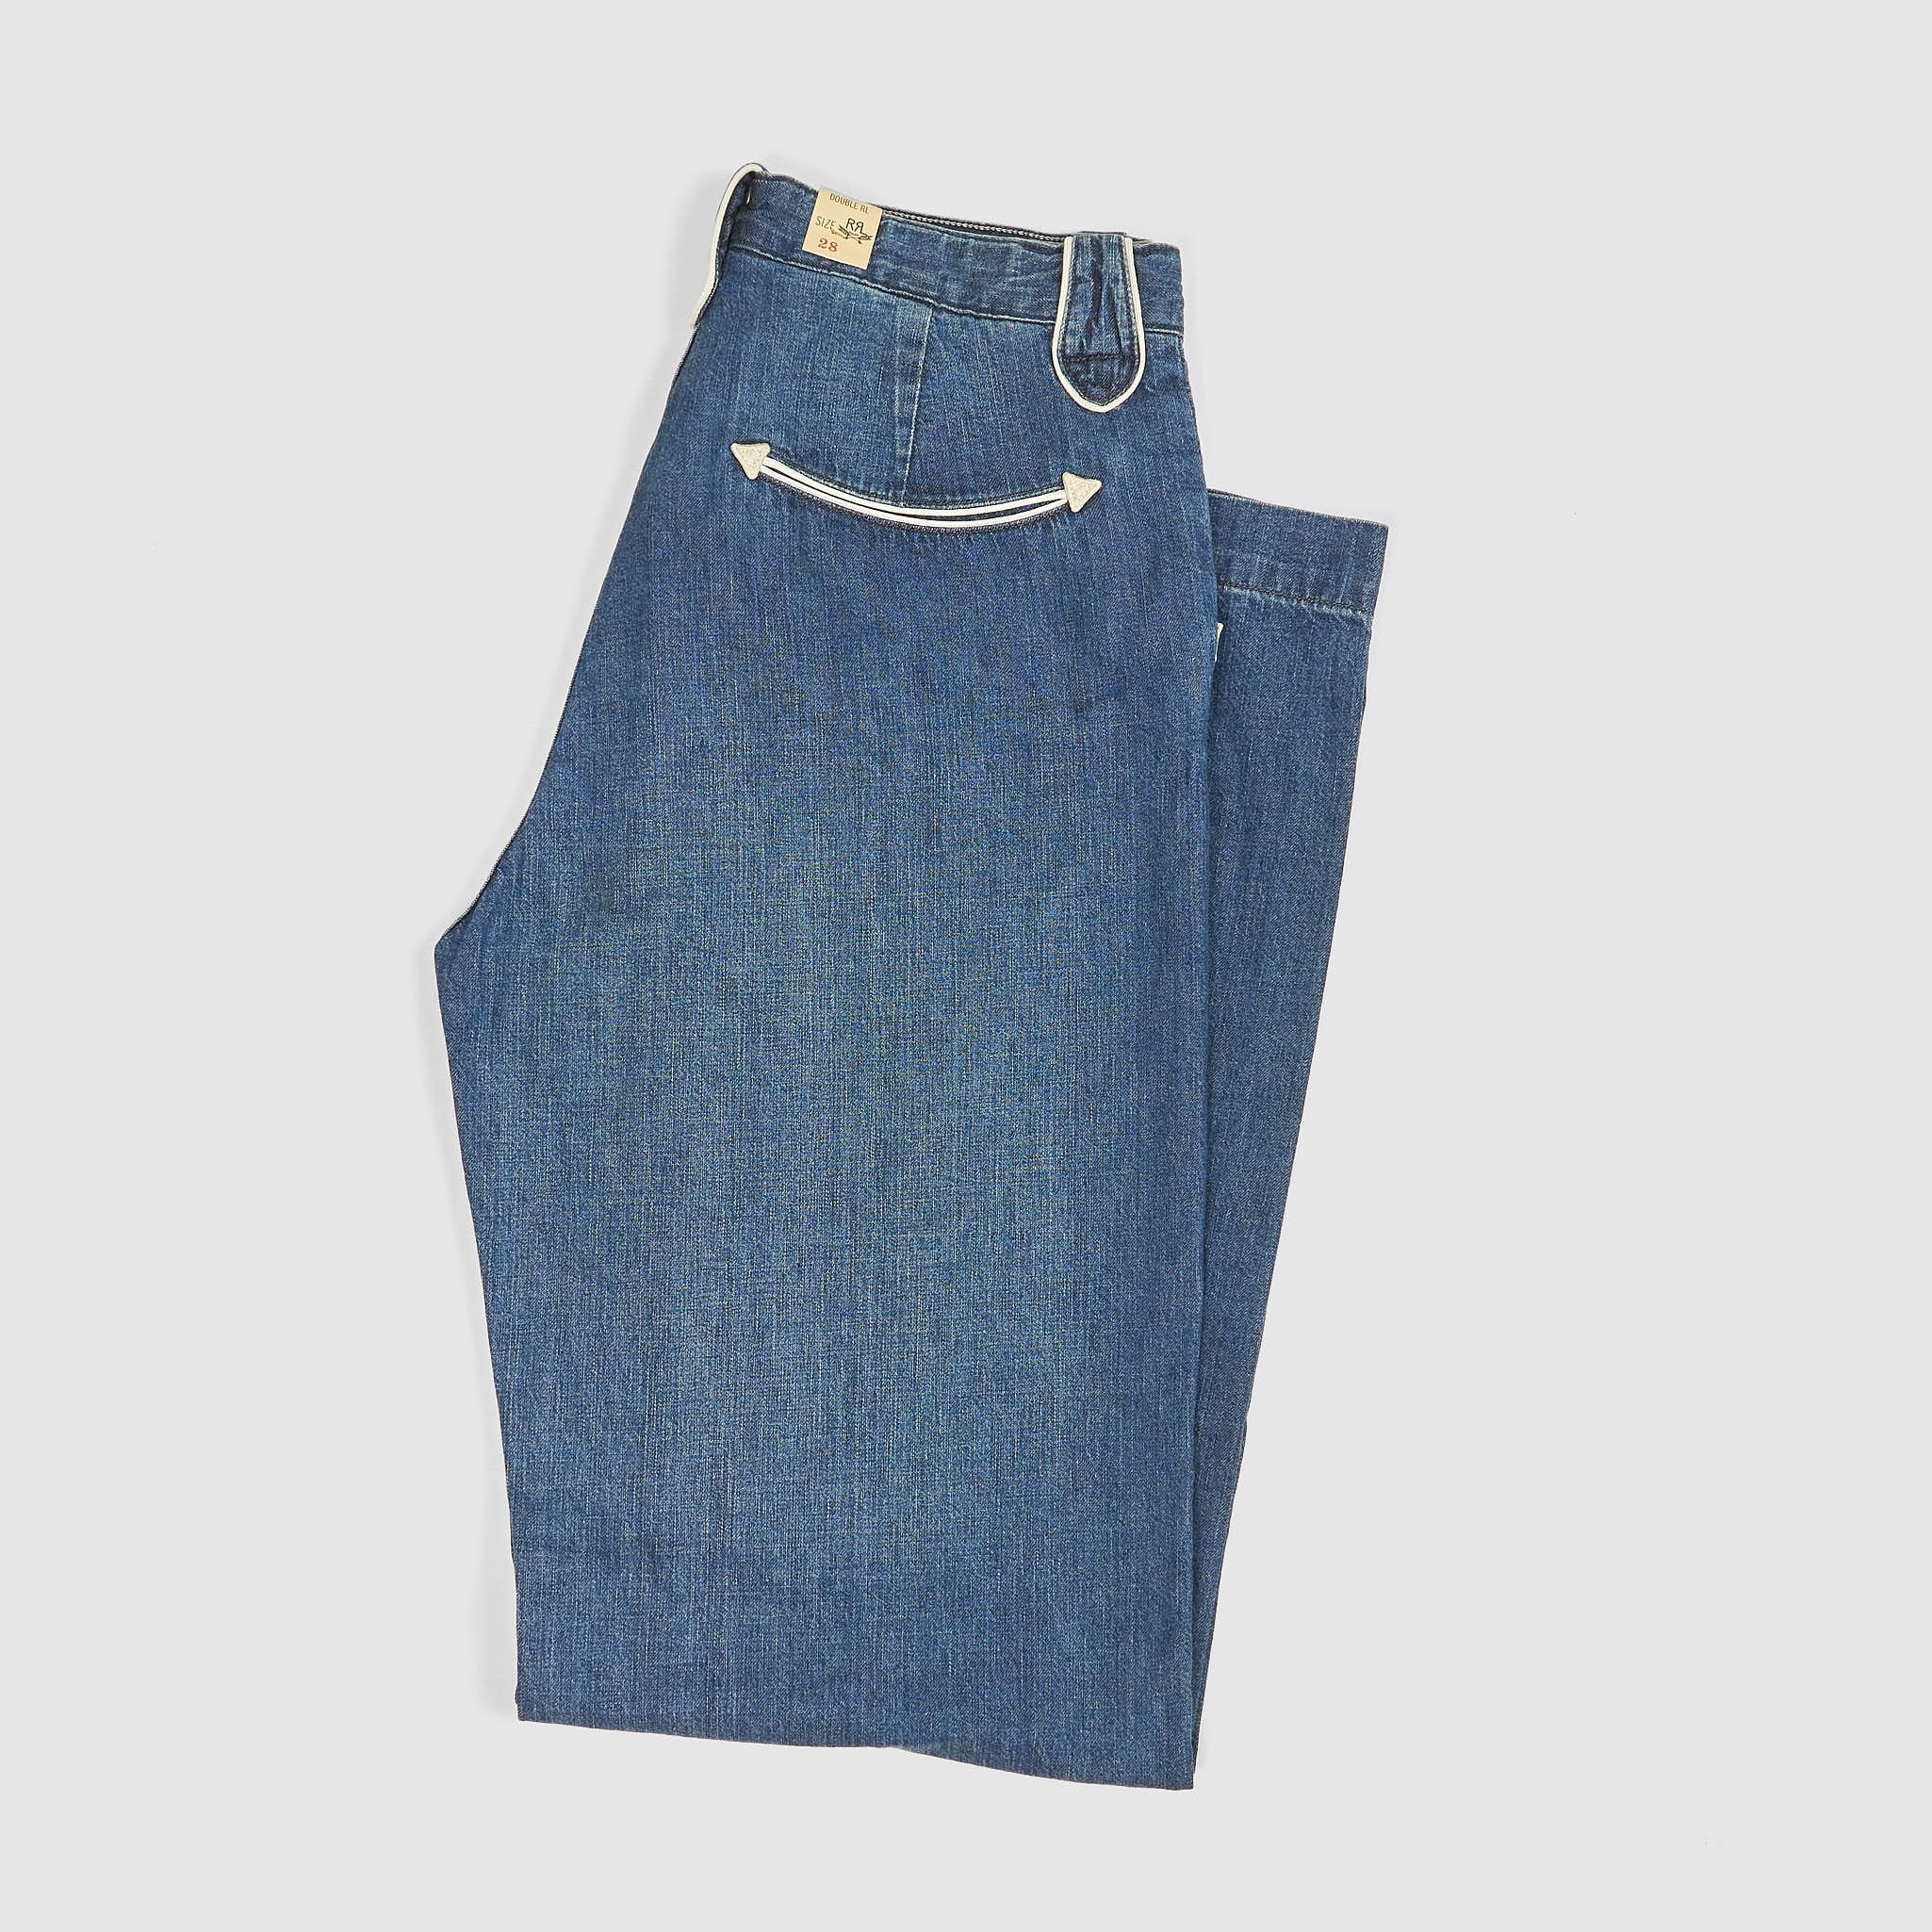 WRANGLER & LEE Jeans for women and men wholesale, Women's clothing, Official archives of Merkandi